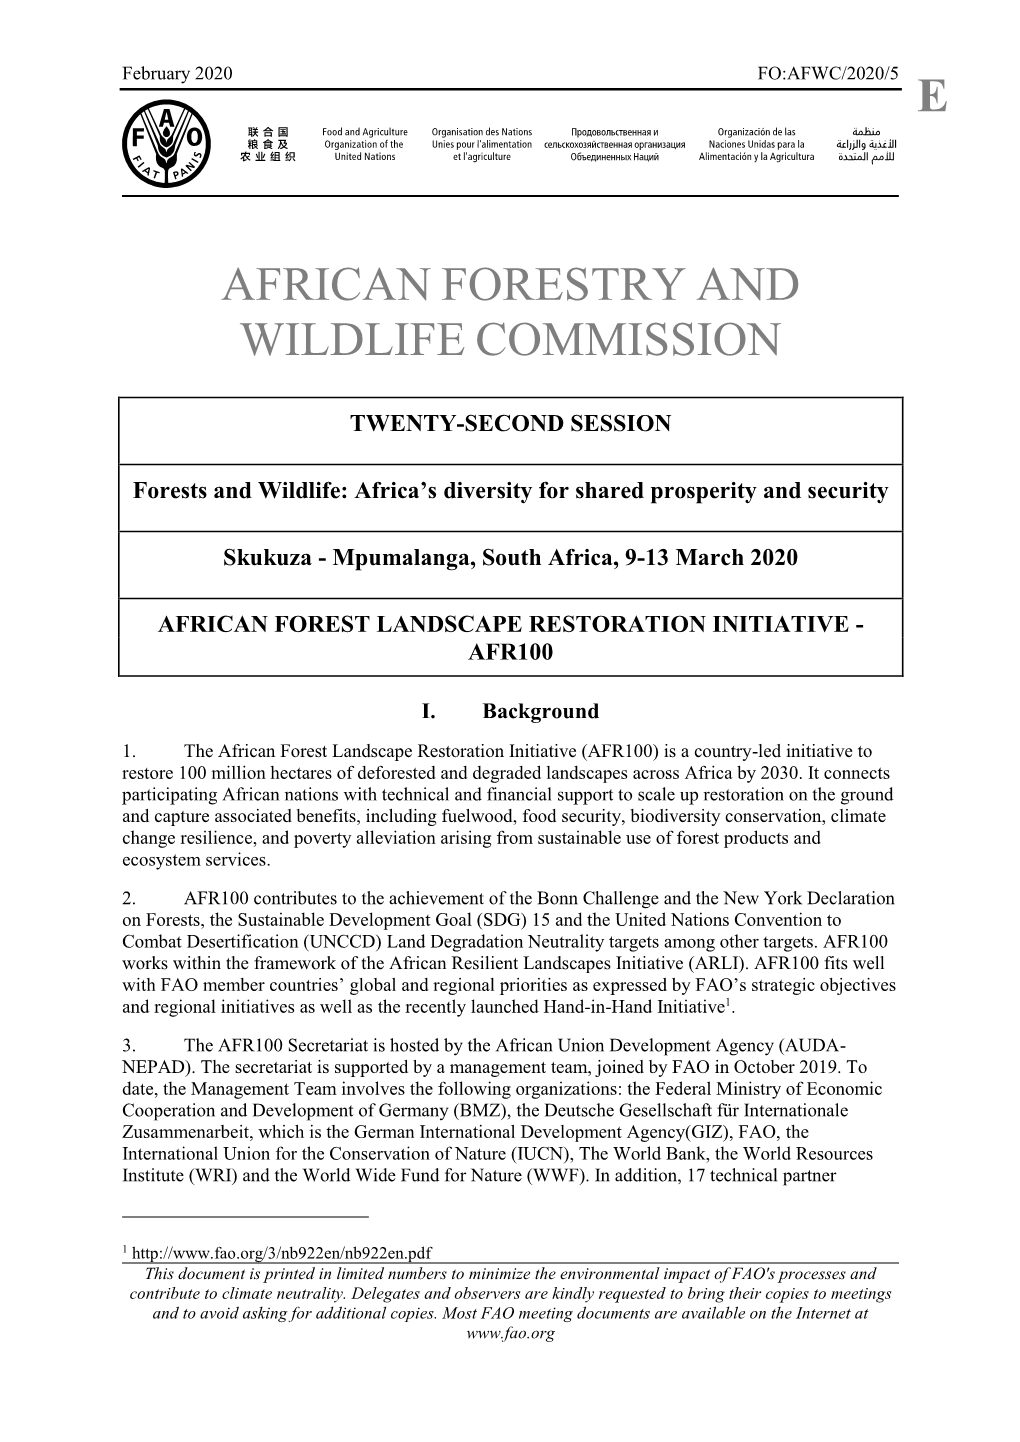 FO:AFWC/2020/05 African Forest Landscape Restoration Initiative